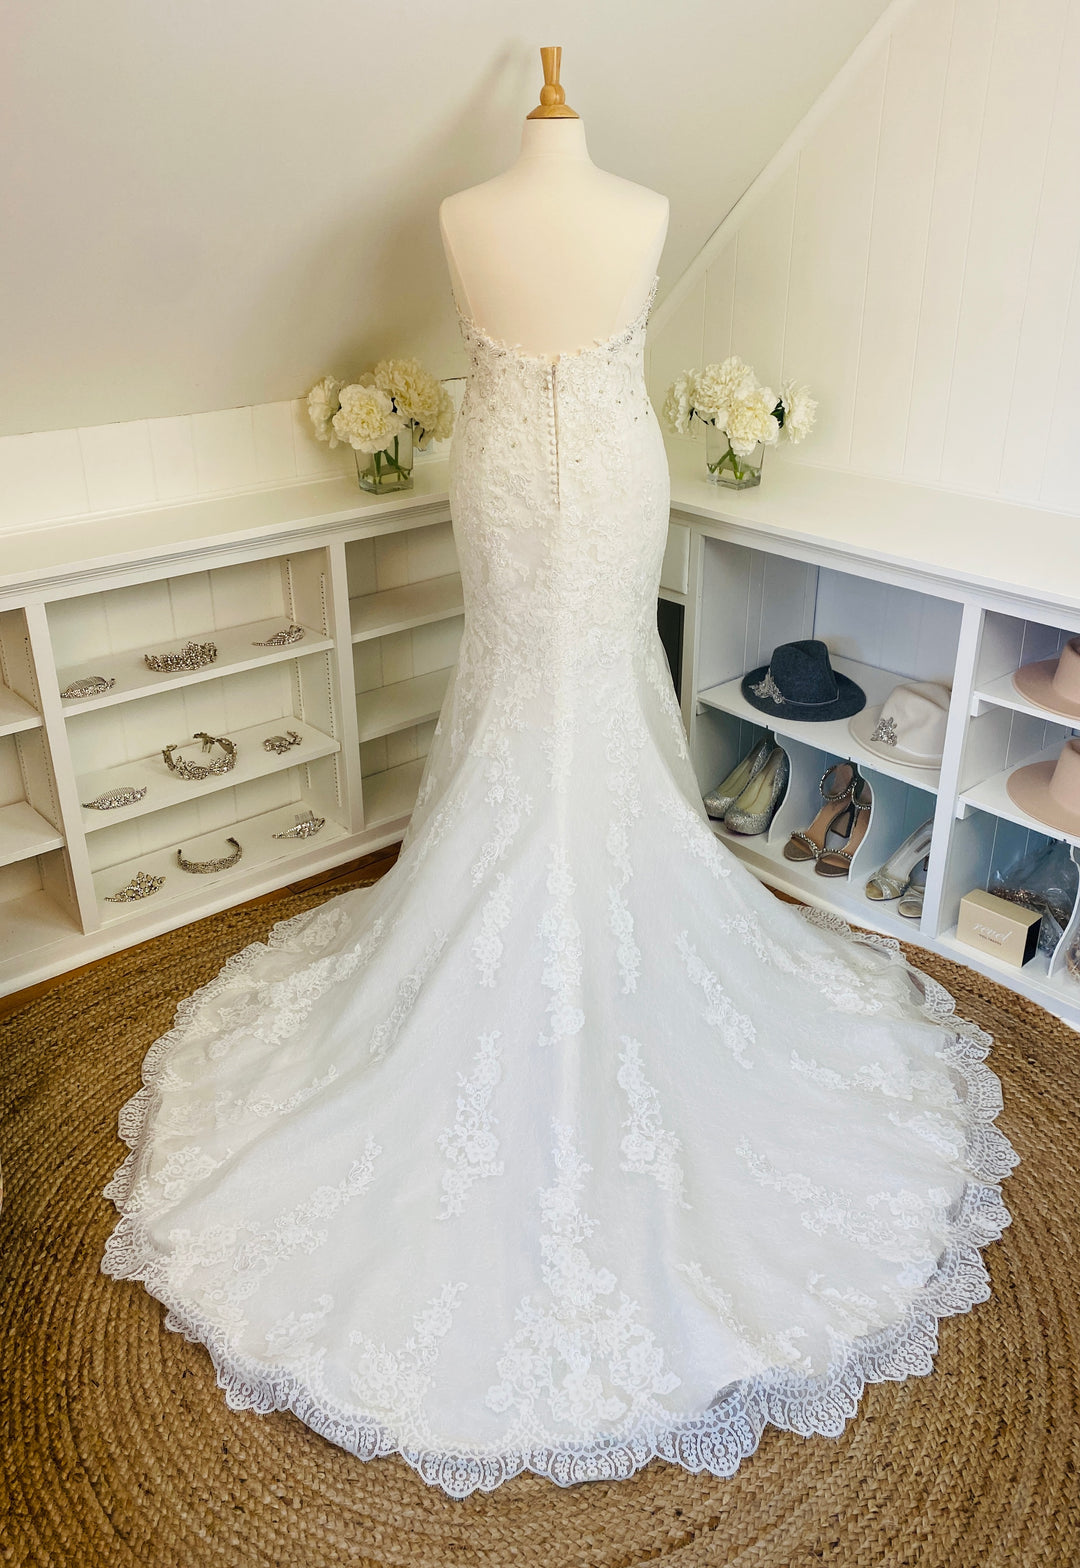 The 'Princia' Wedding Gown Size 20